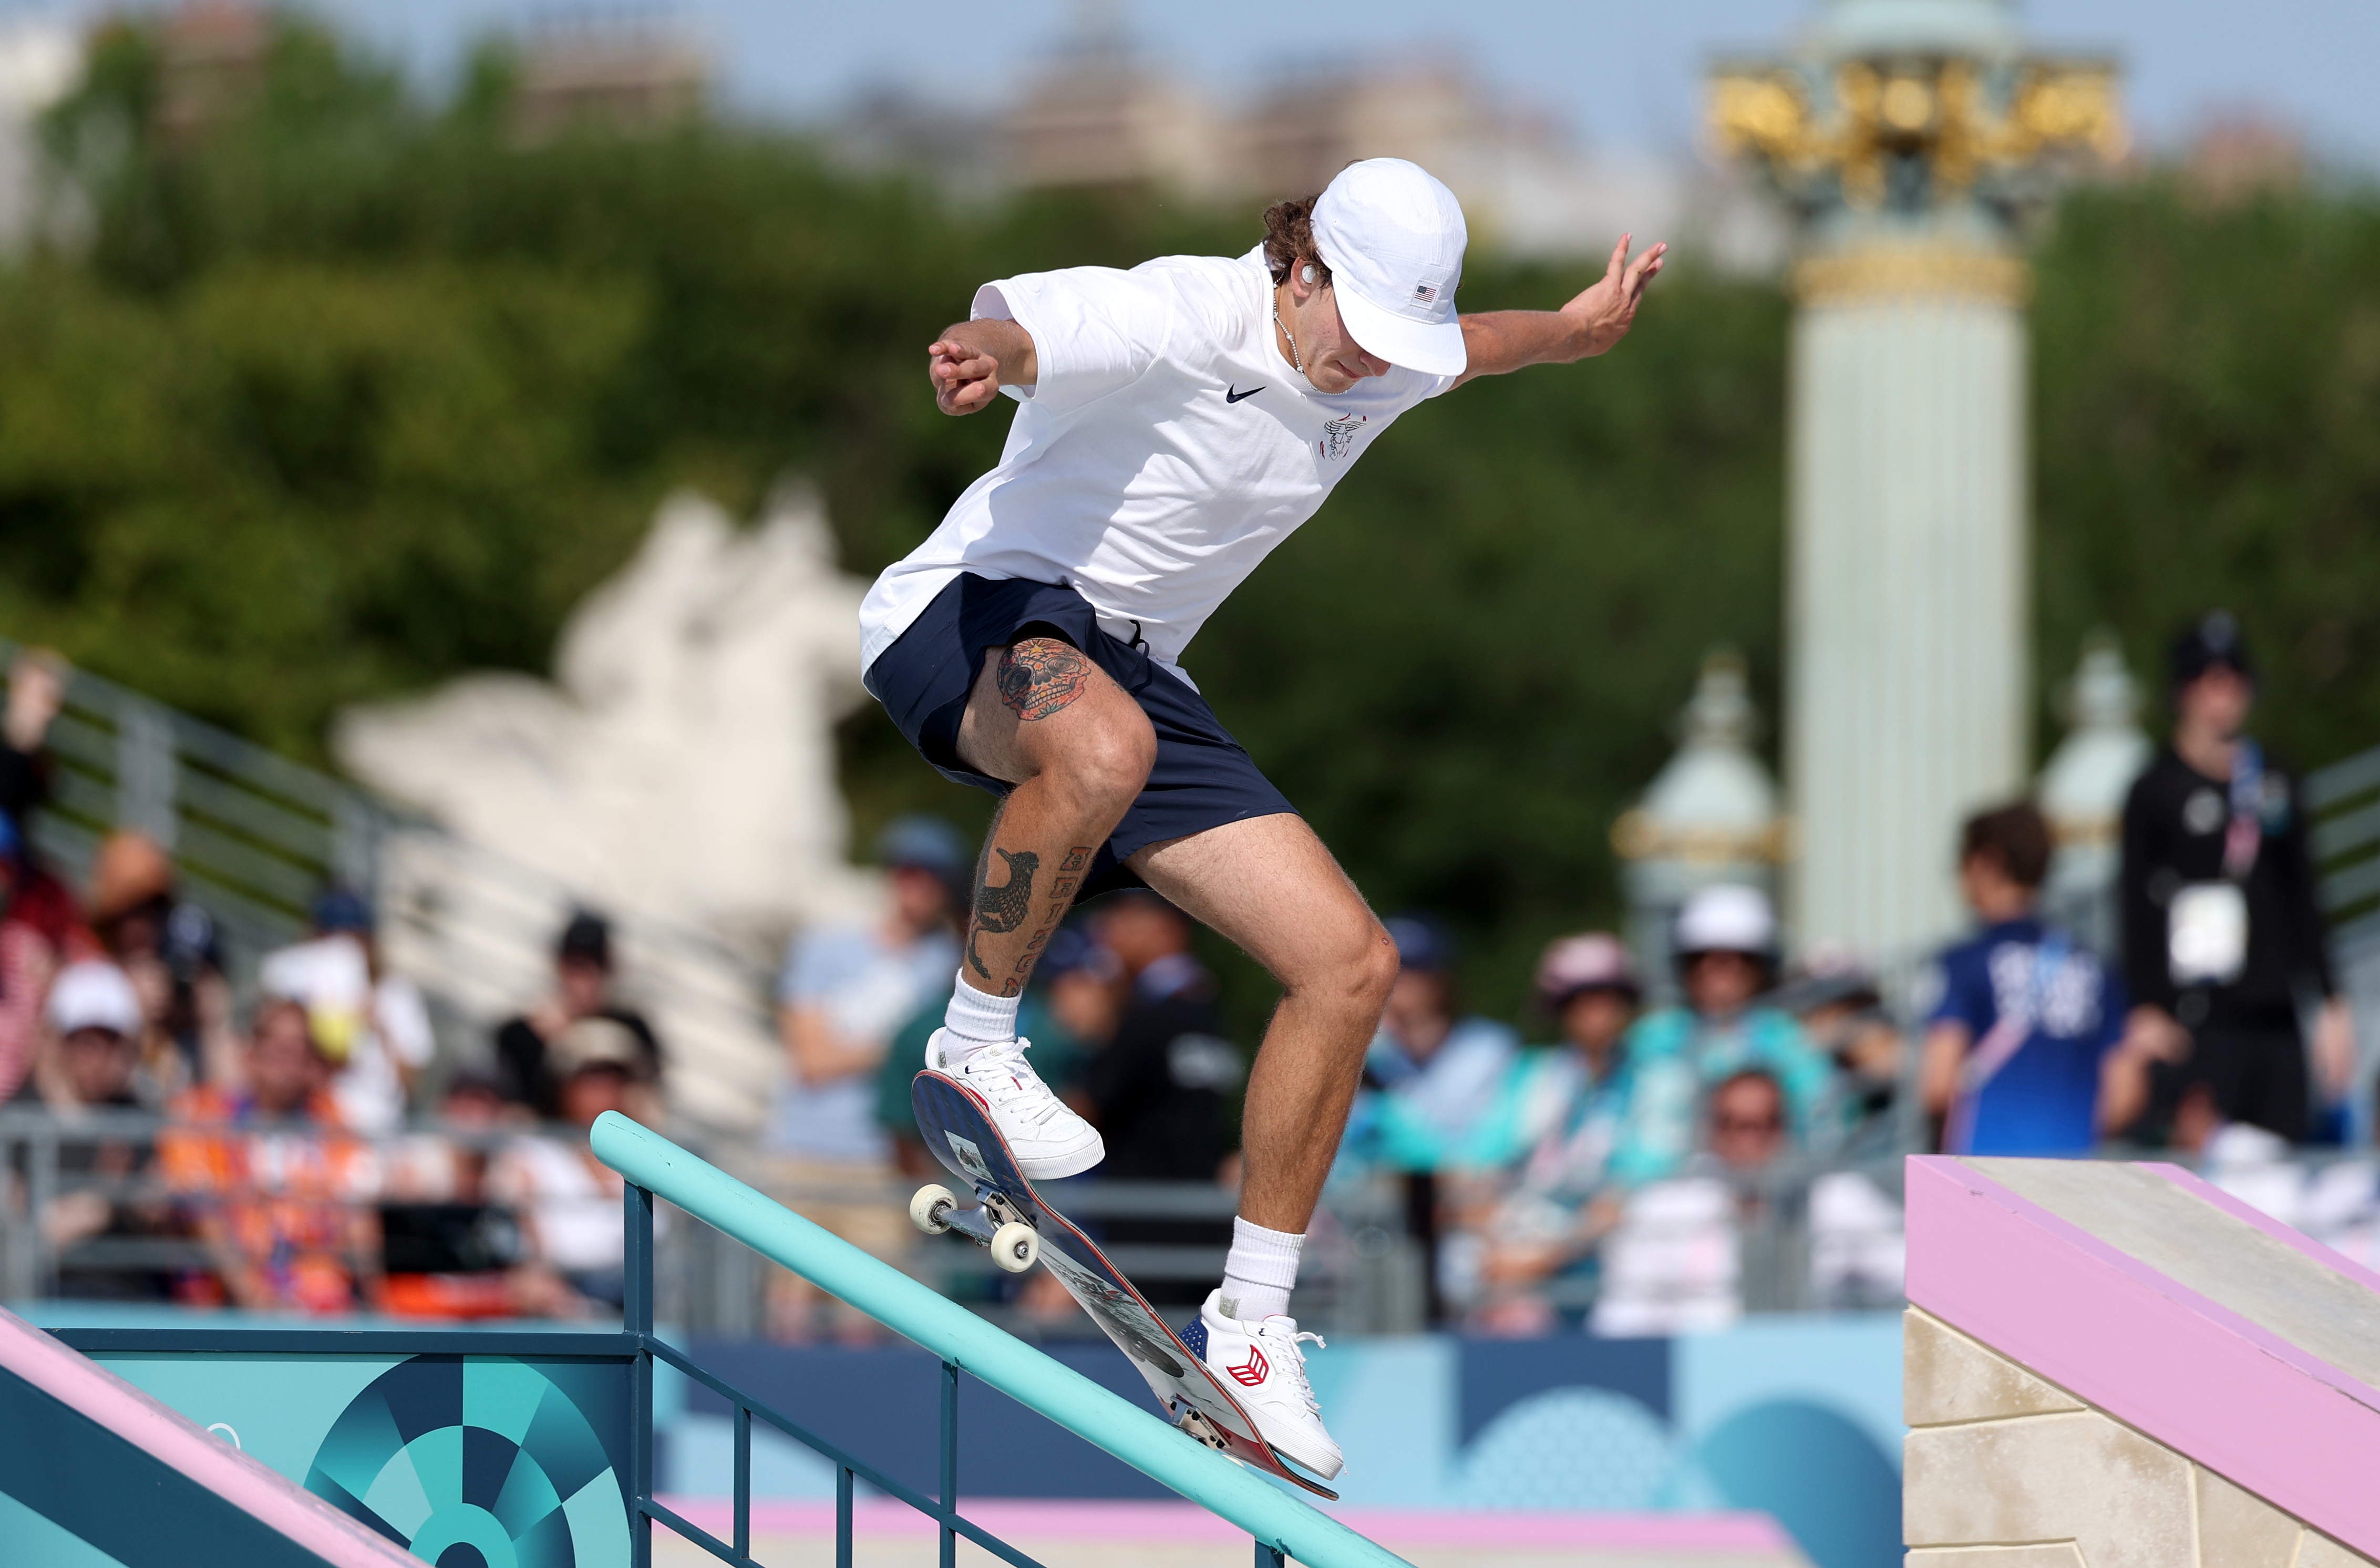 Paris Olympics: USA Takes Silver, Bronze in Men’s Street Skateboarding